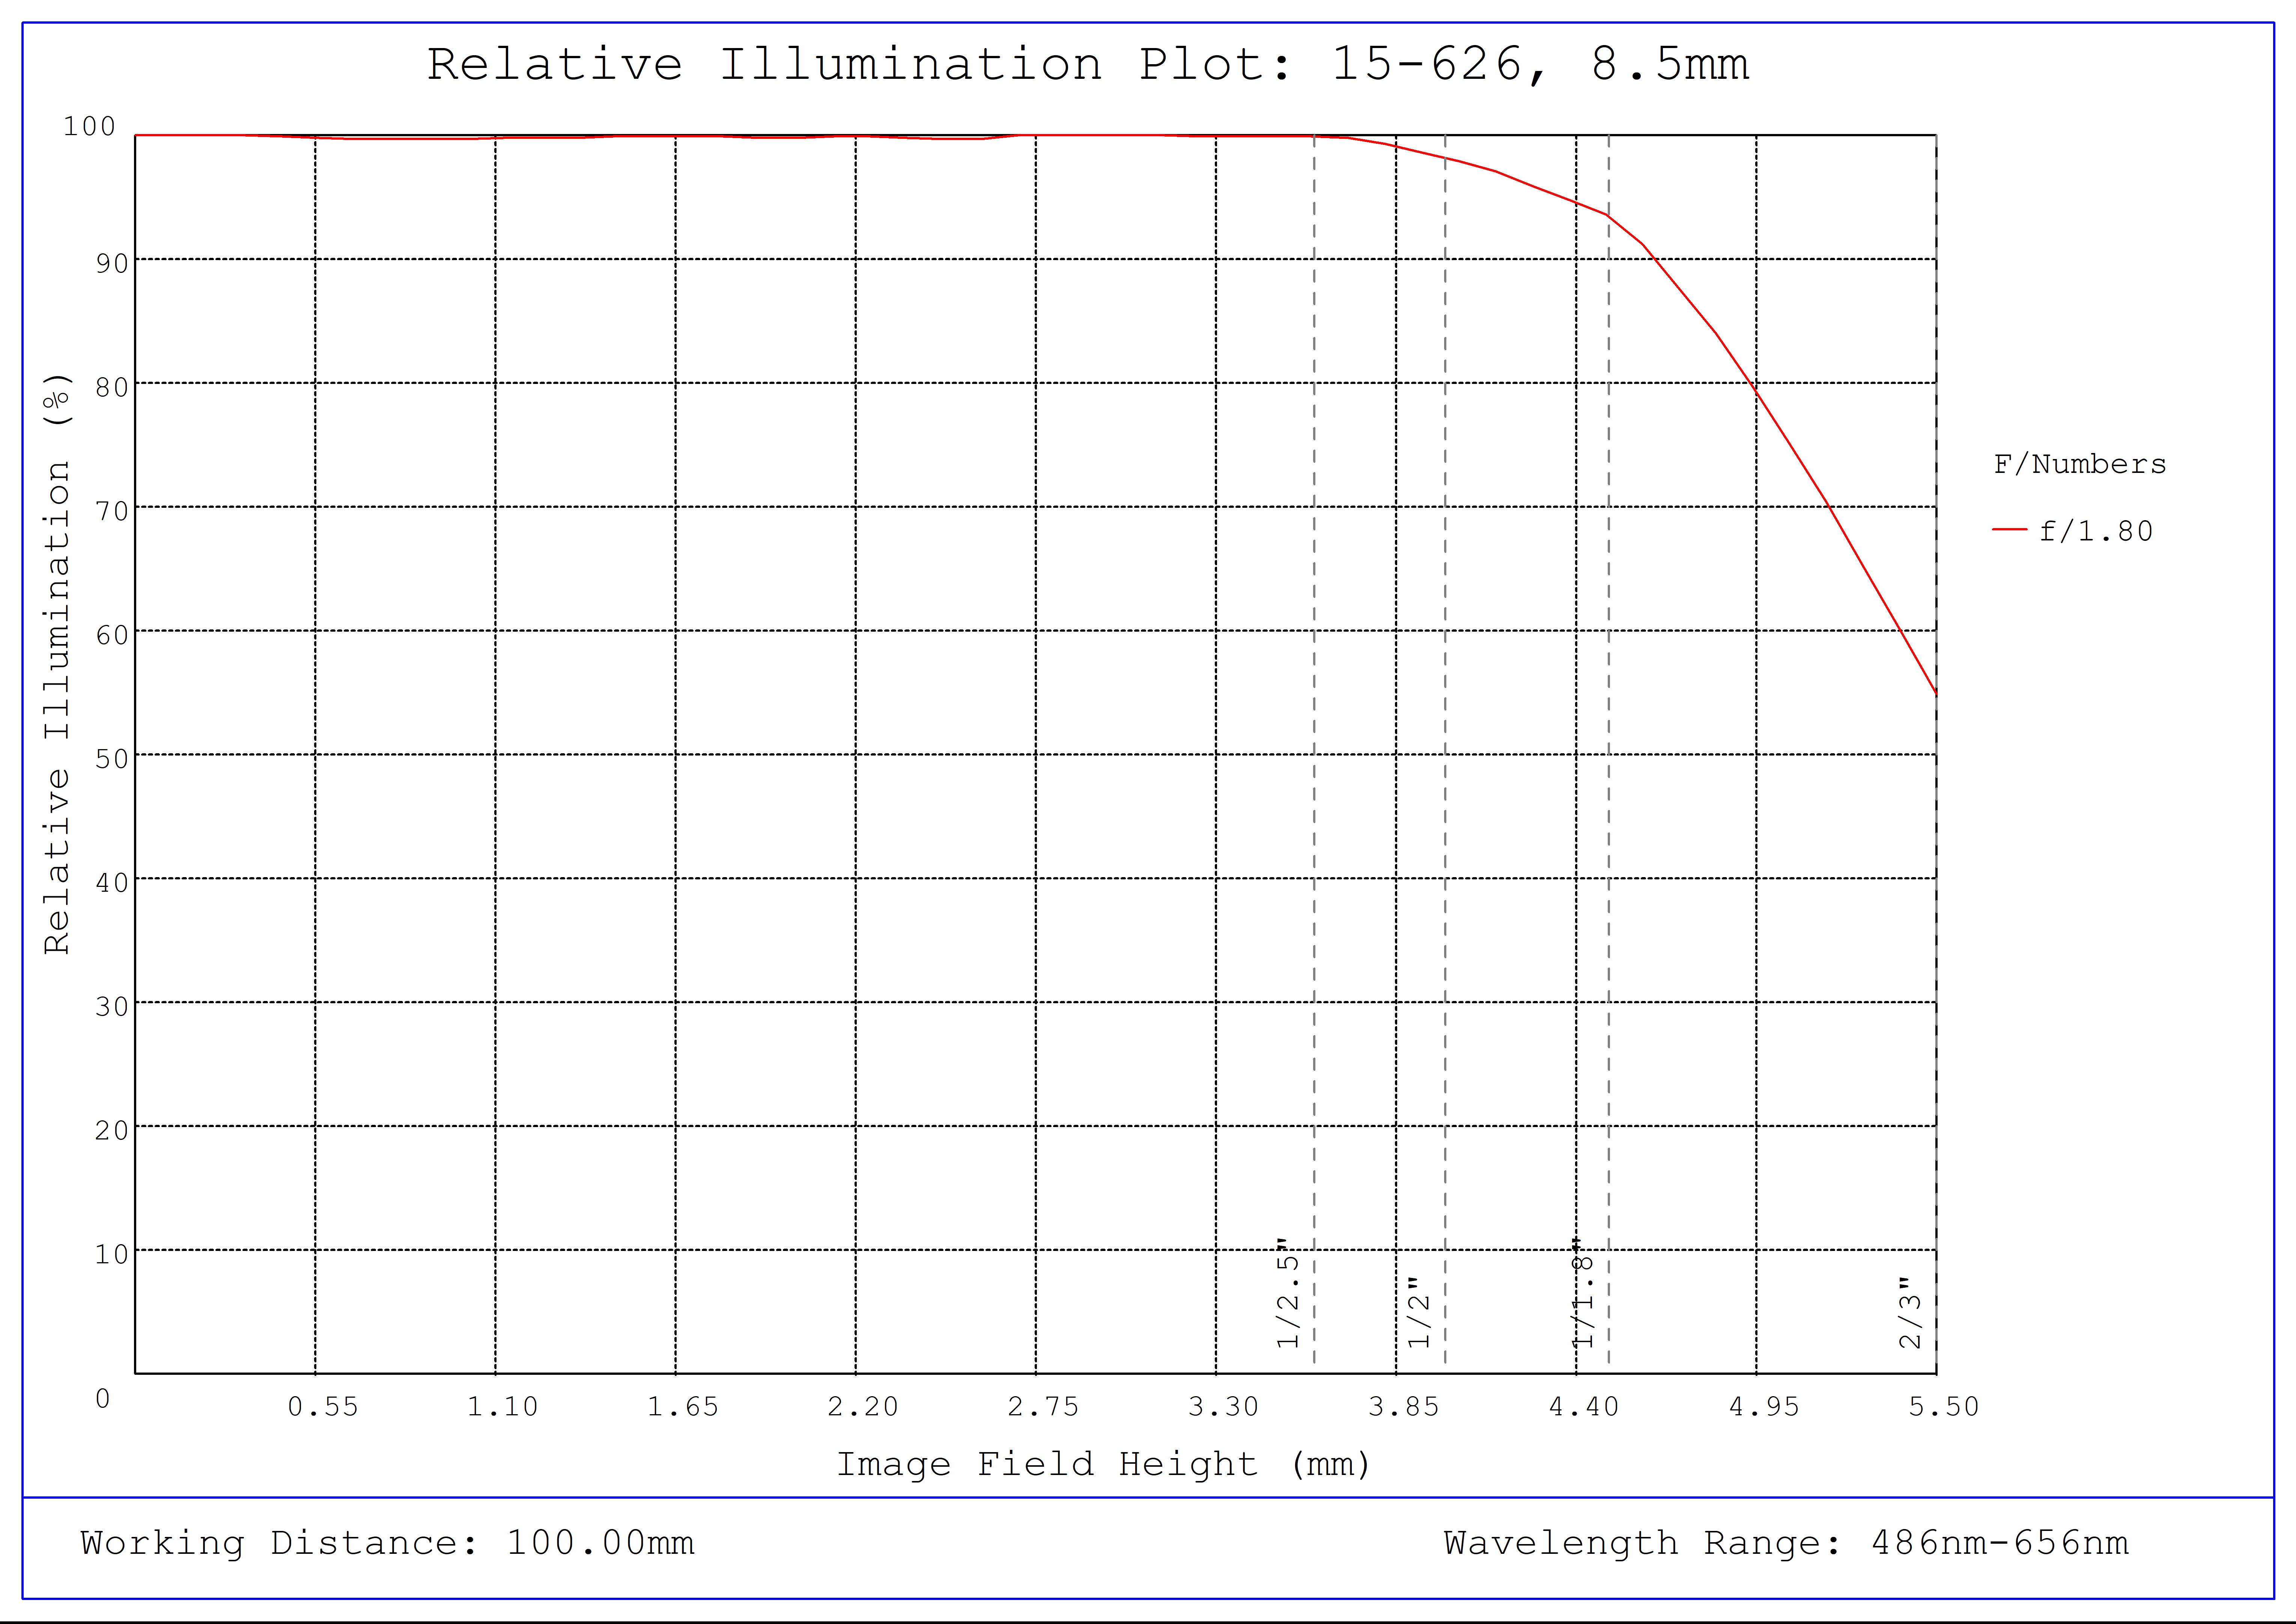 #15-626, 8.5mm, f/1.8 Cw Series Fixed Focal Length Lens, Relative Illumination Plot